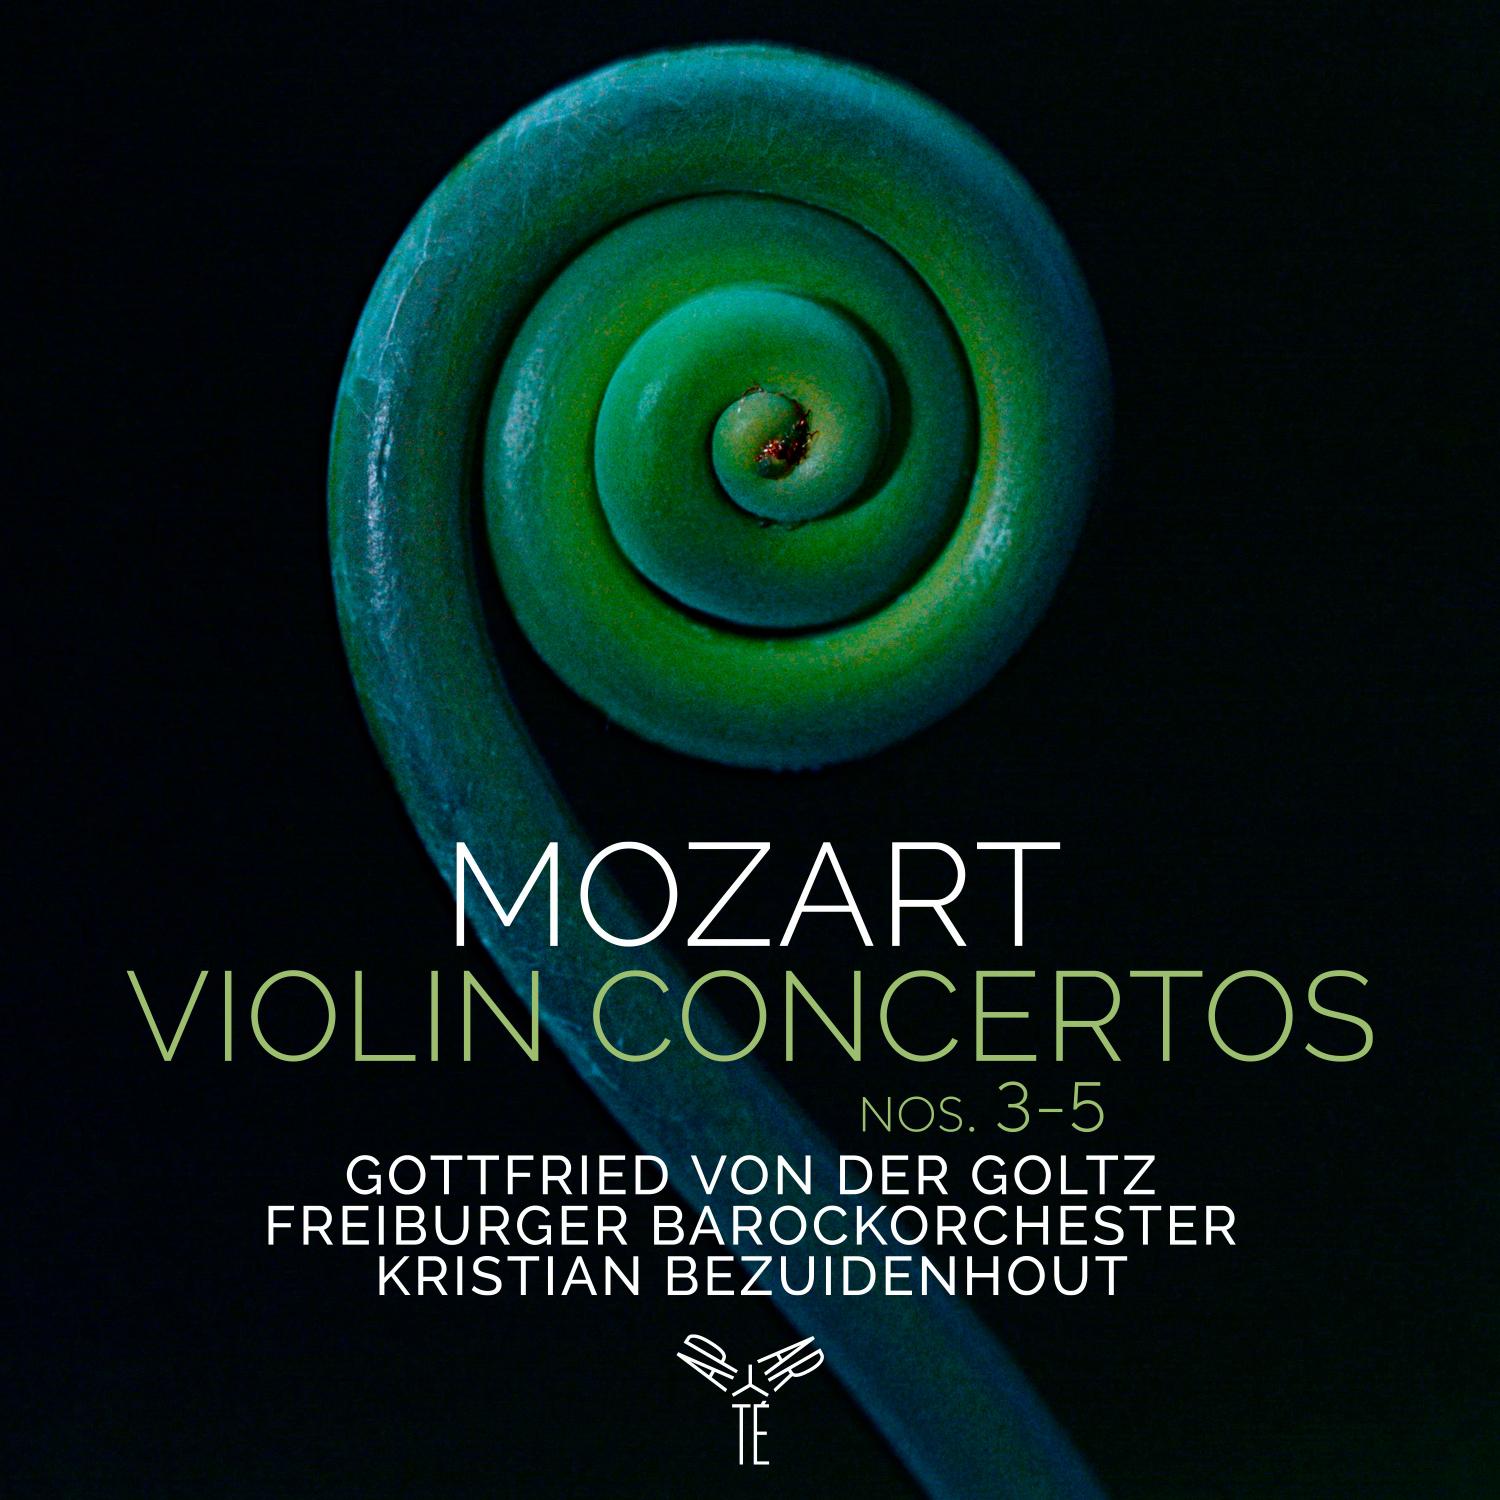 Have You Heard? | Violin Concertos Nos. 3–5 Kristian Bezuidenhout, Freiburg Orchestra | WQXR Features | WQXR